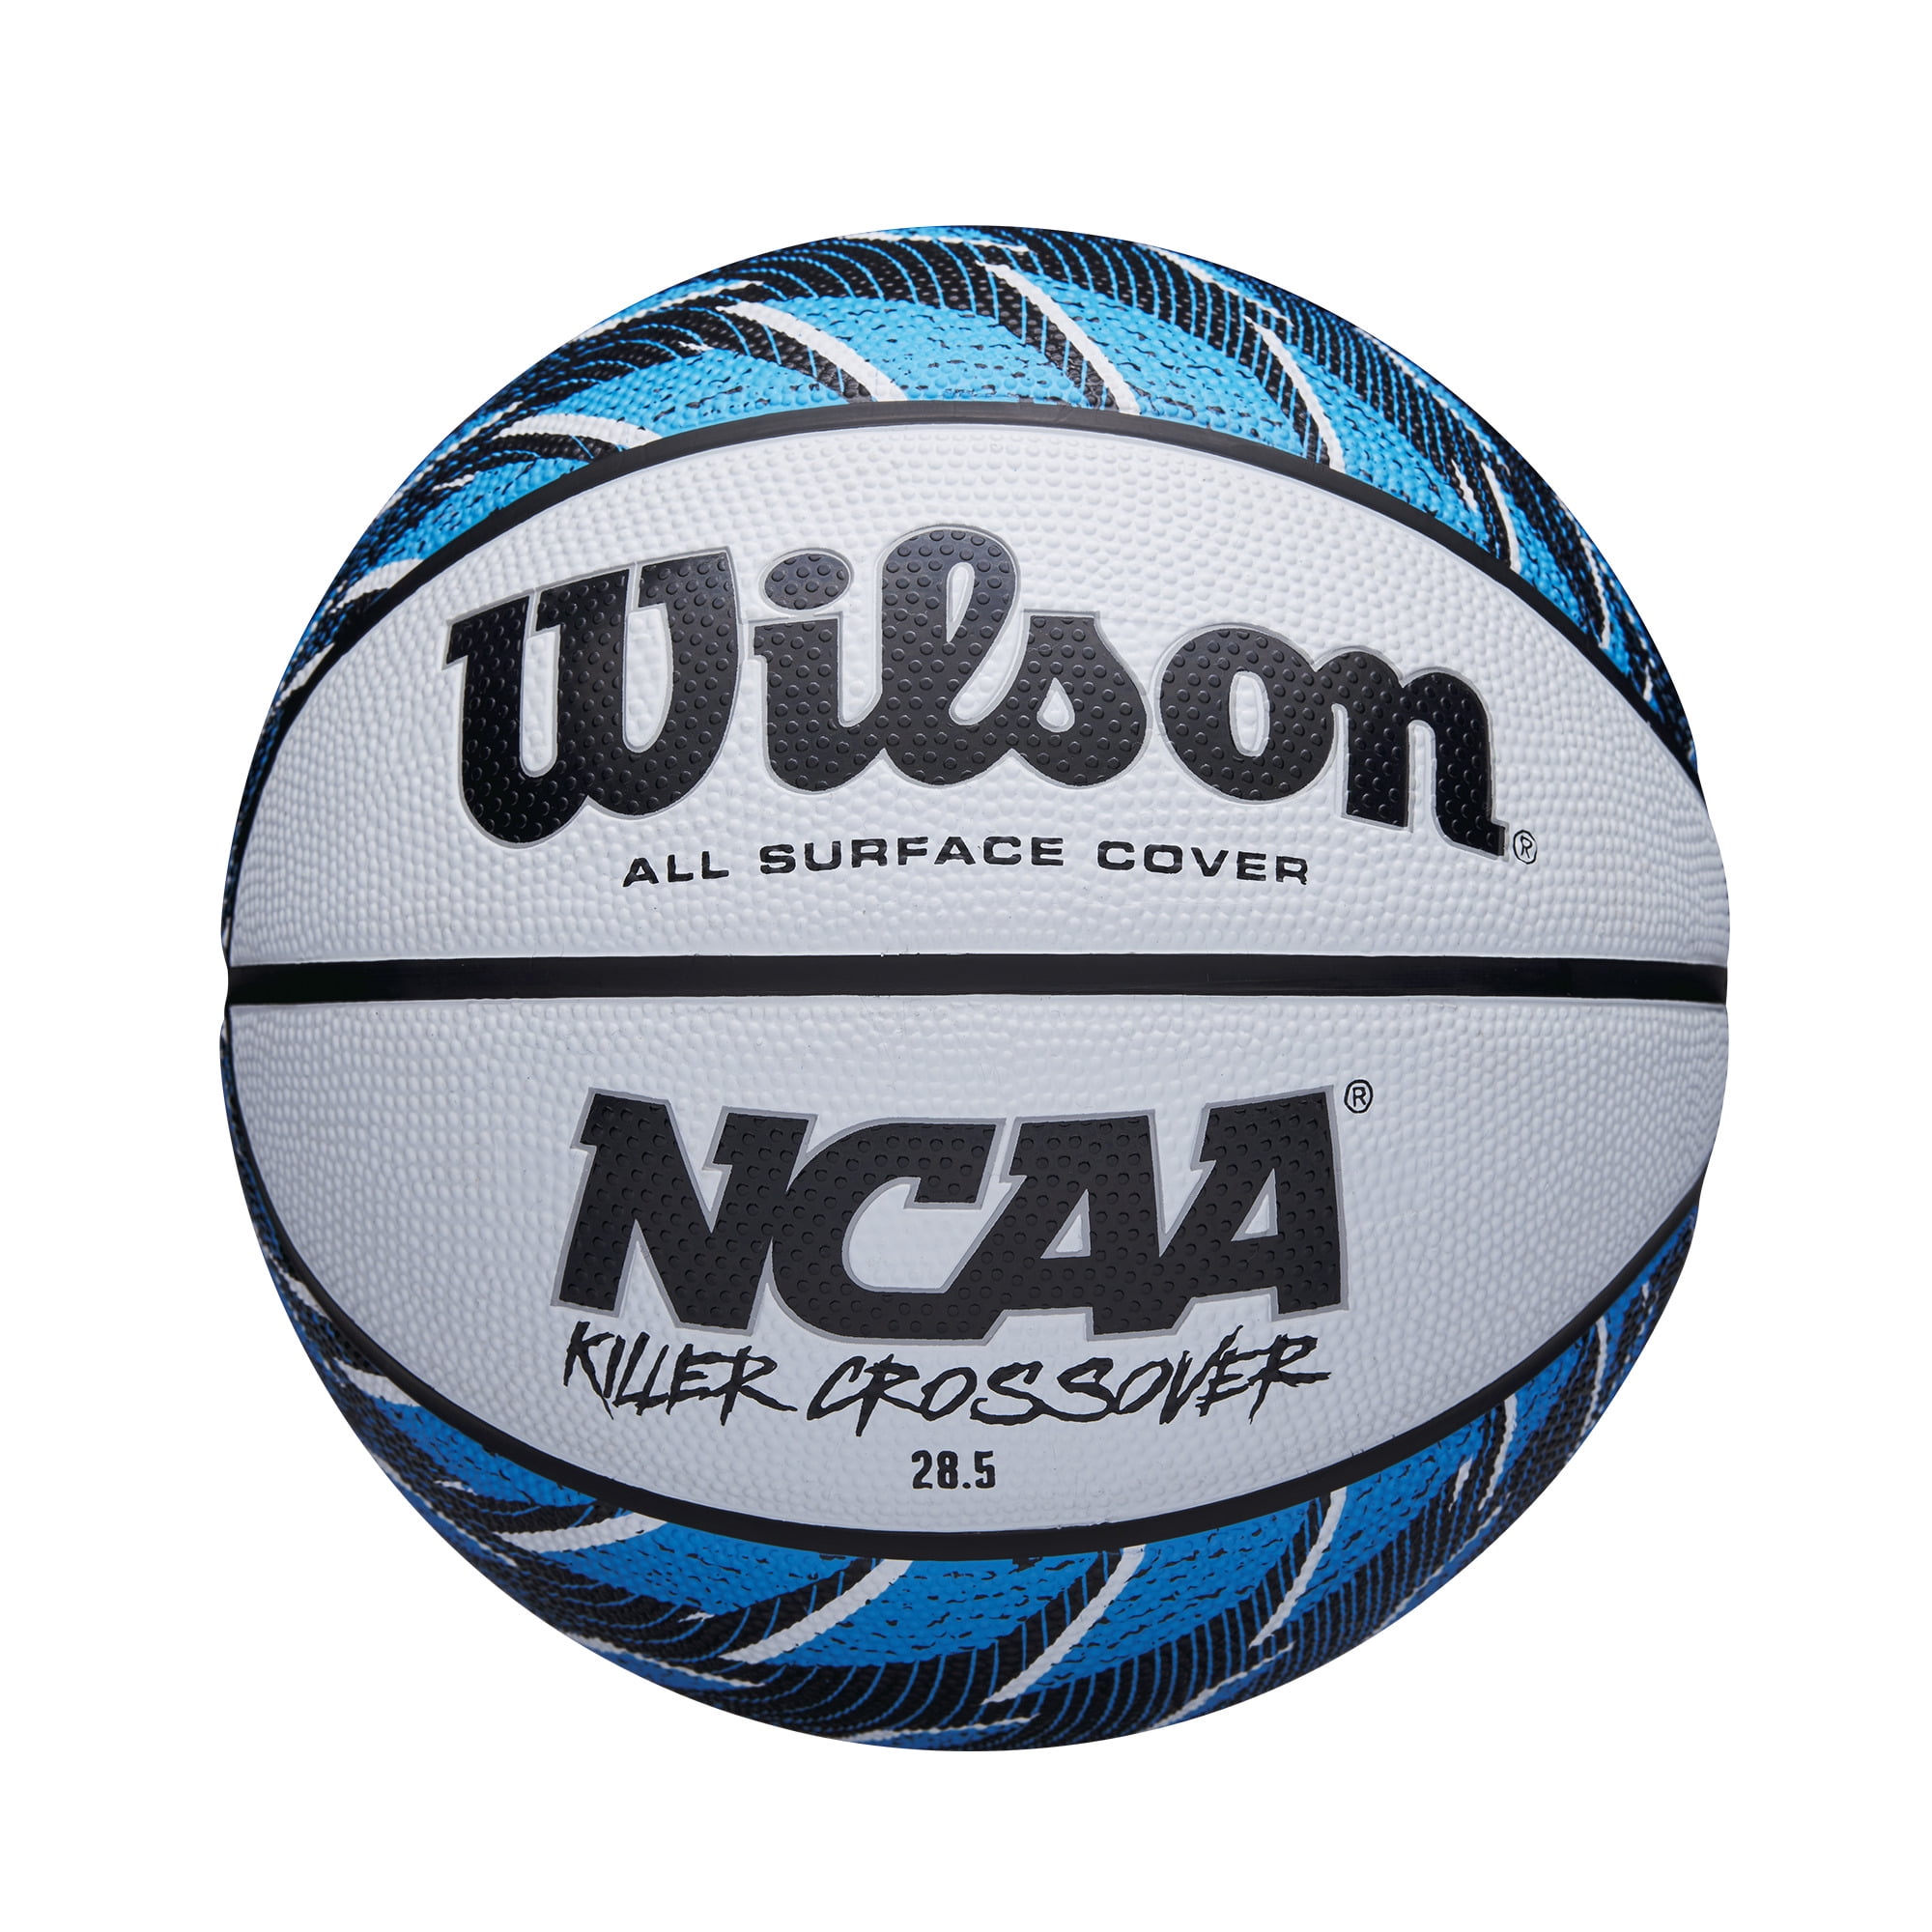 Wilson NCAA Killer Crossover BasketballMultiple Size 6-7-8 